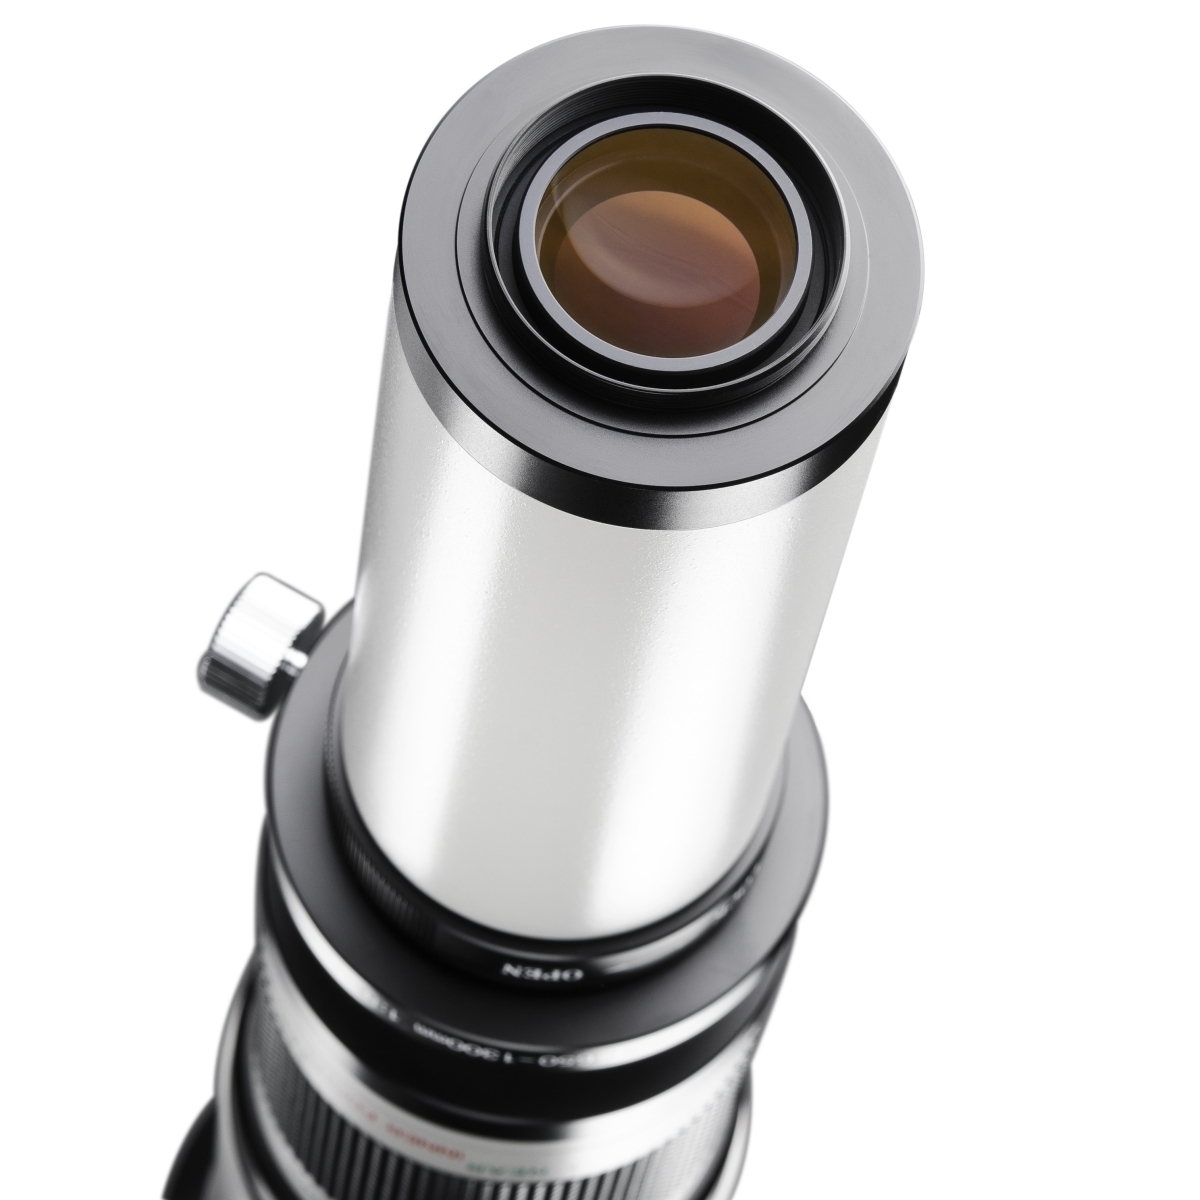 vivitar lens for canon eos 650 - 1300 mm telephoto zoom